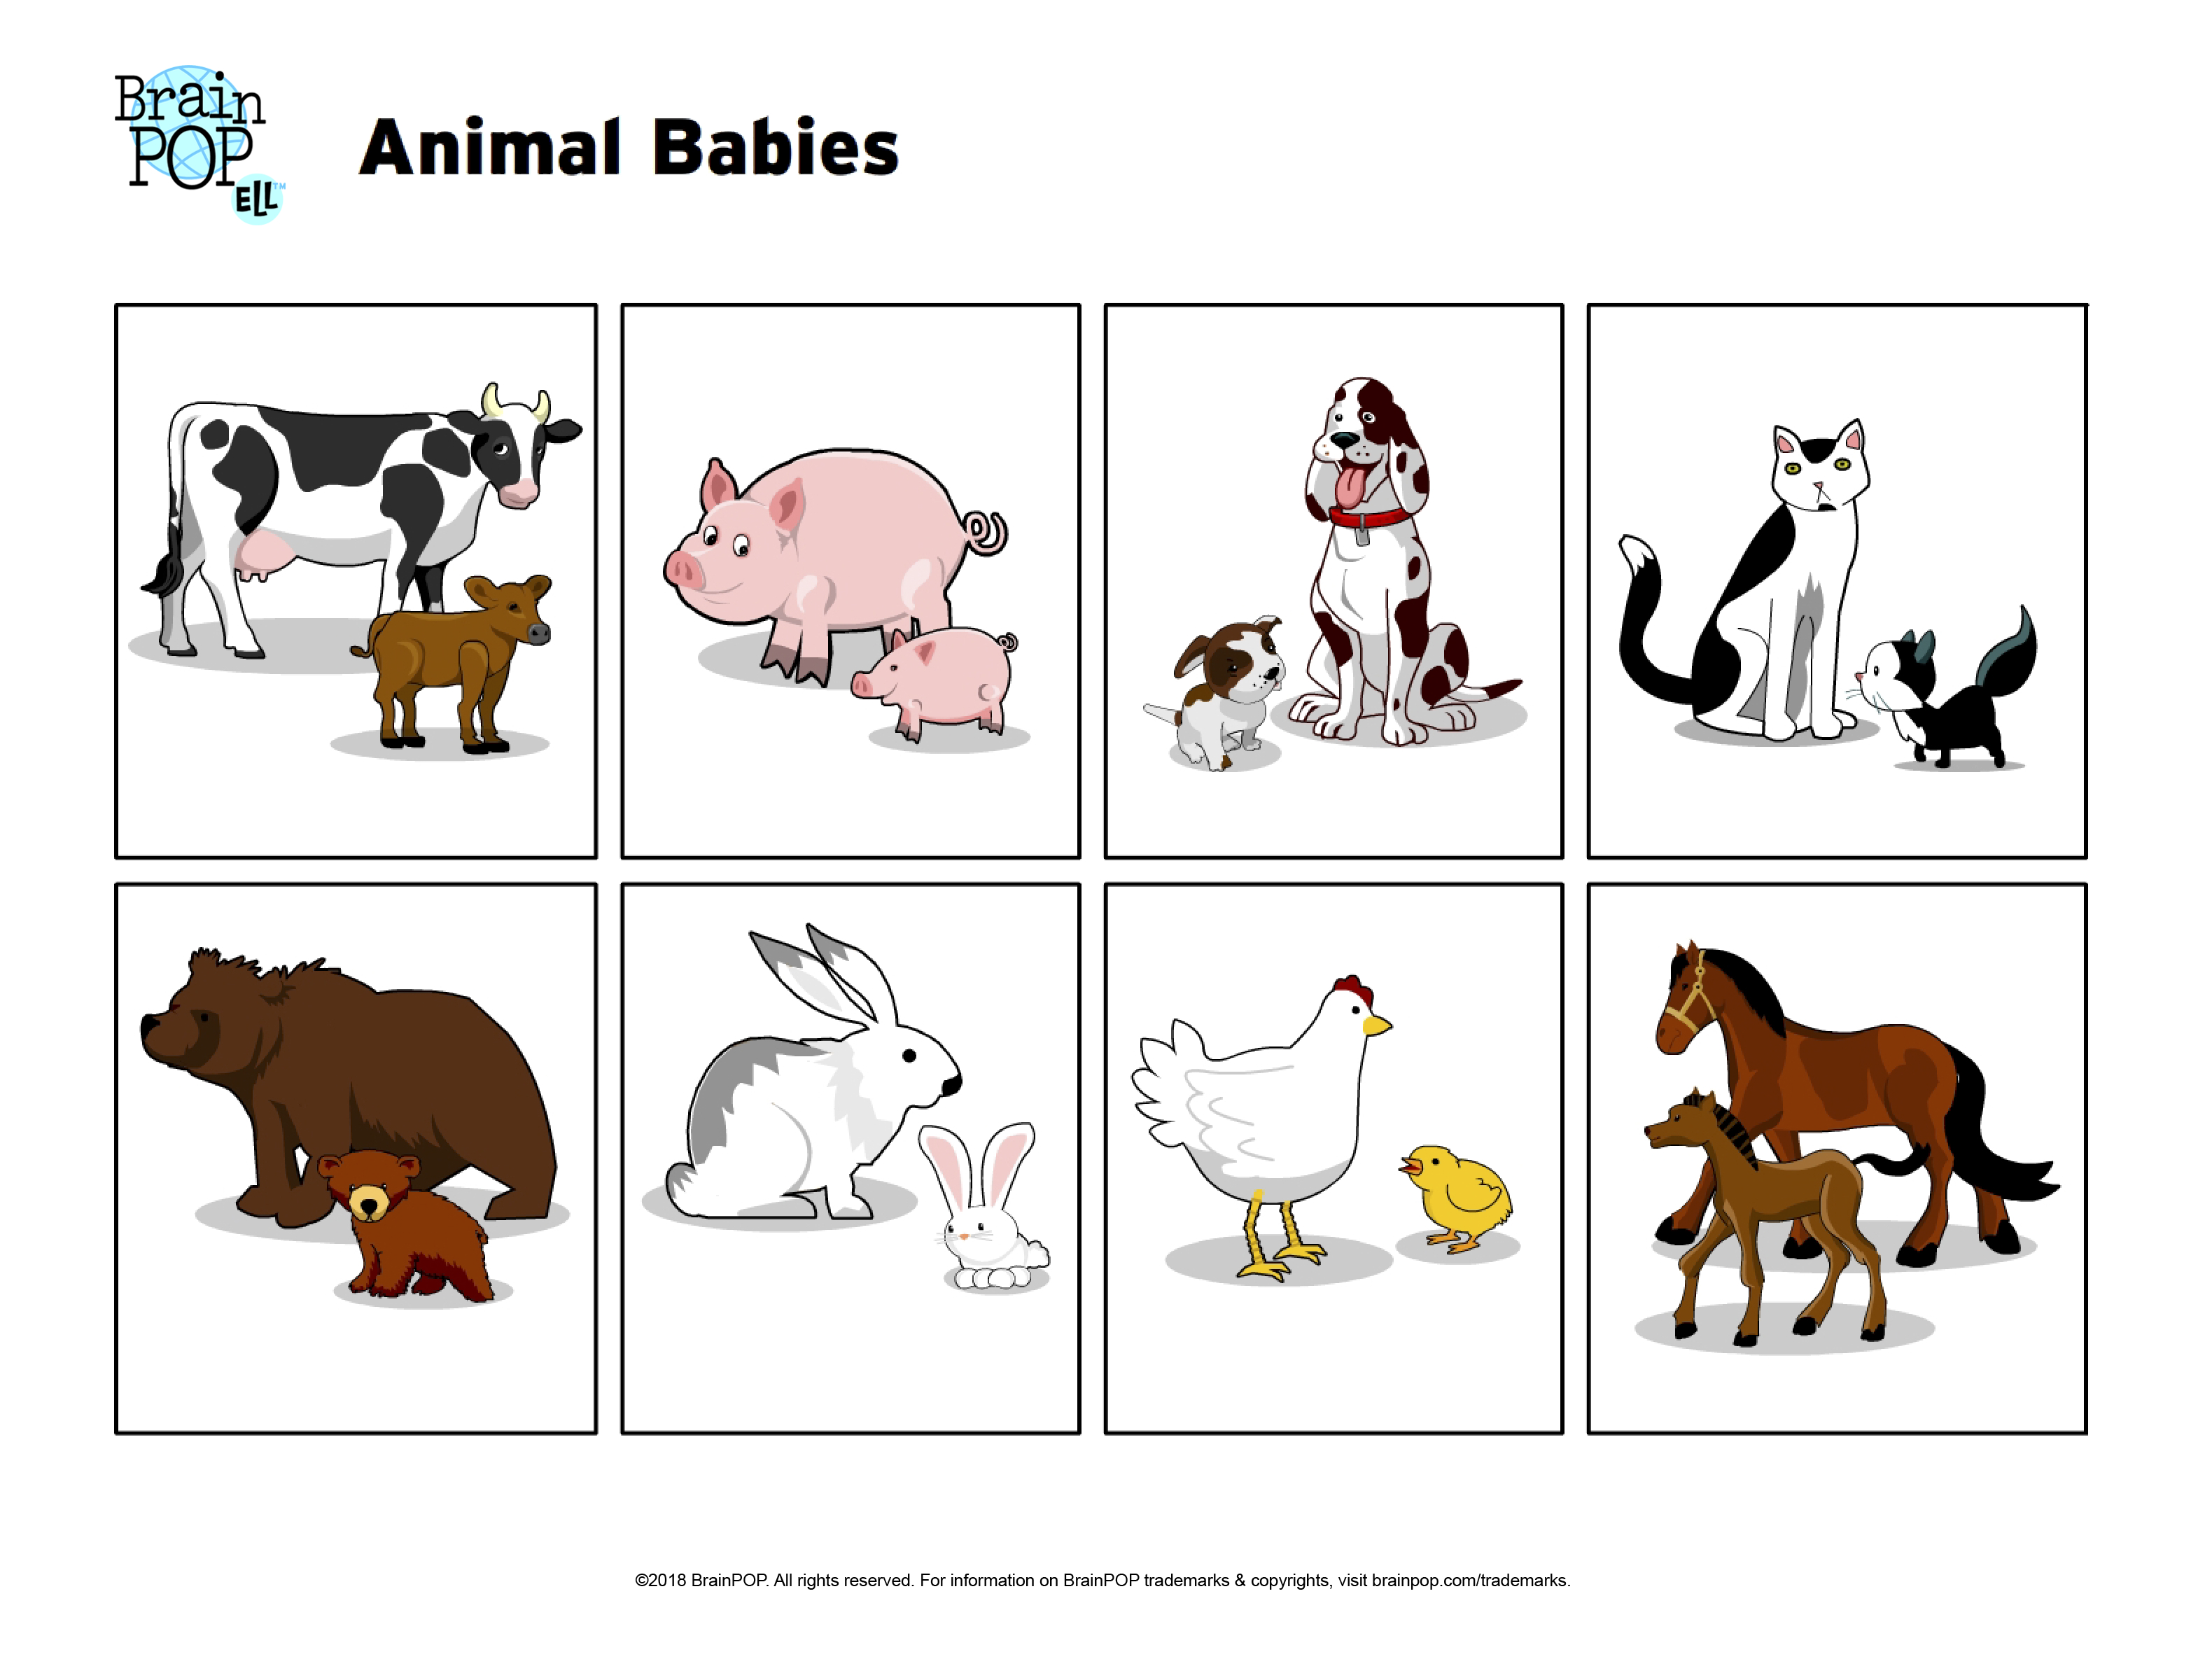 Animal Babies Image Prompt